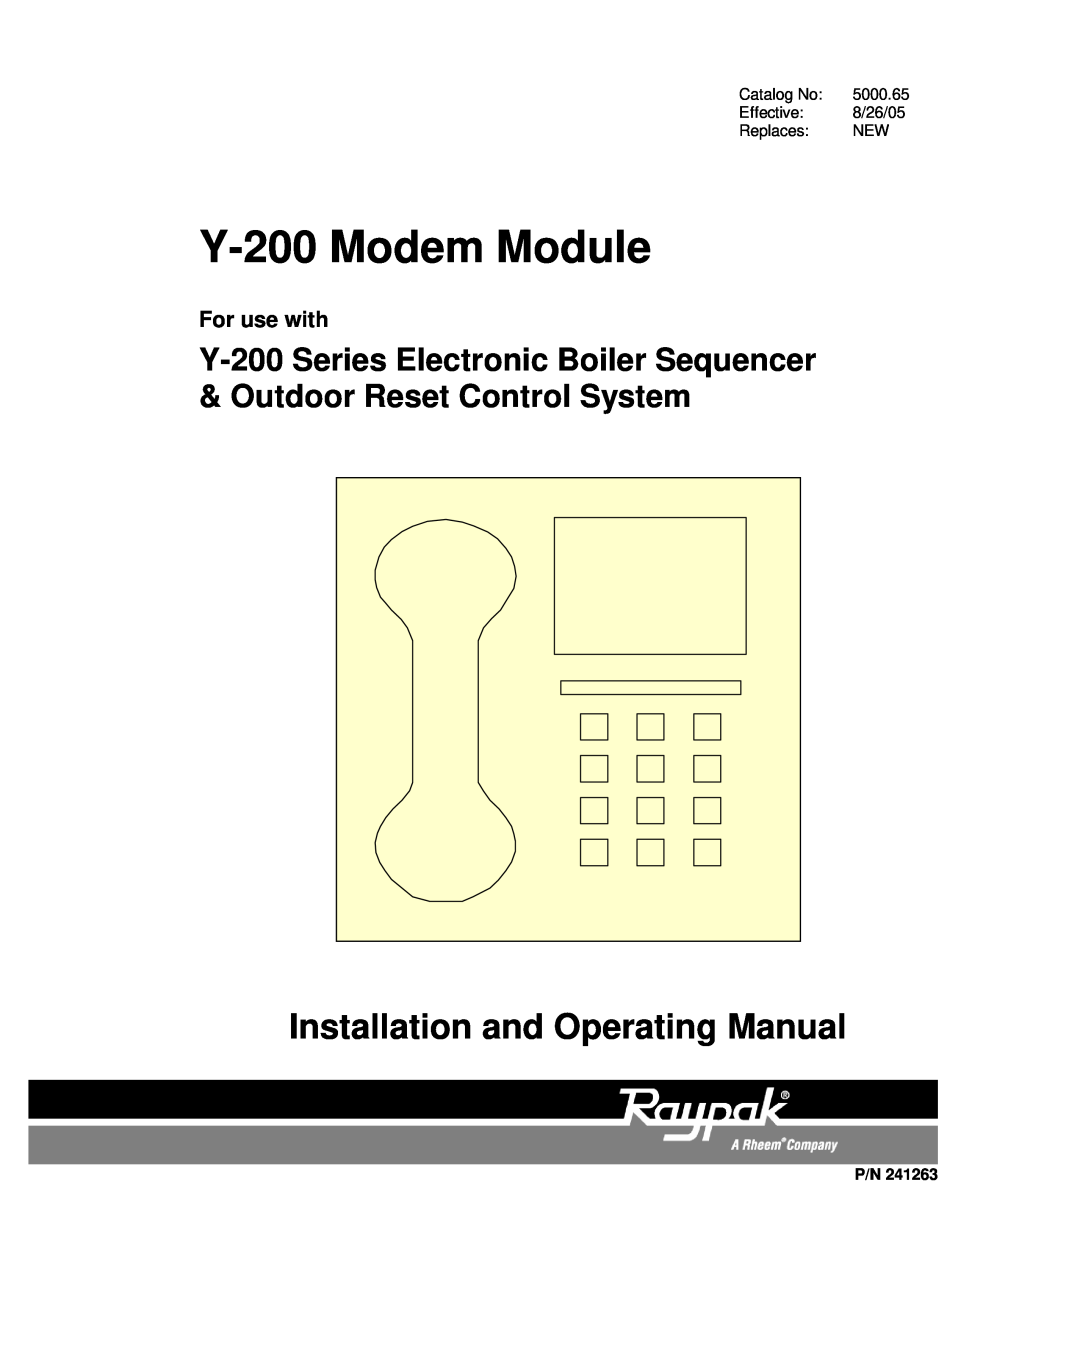 Raypak manual Y-200Series, Installation & Operating Instructions 